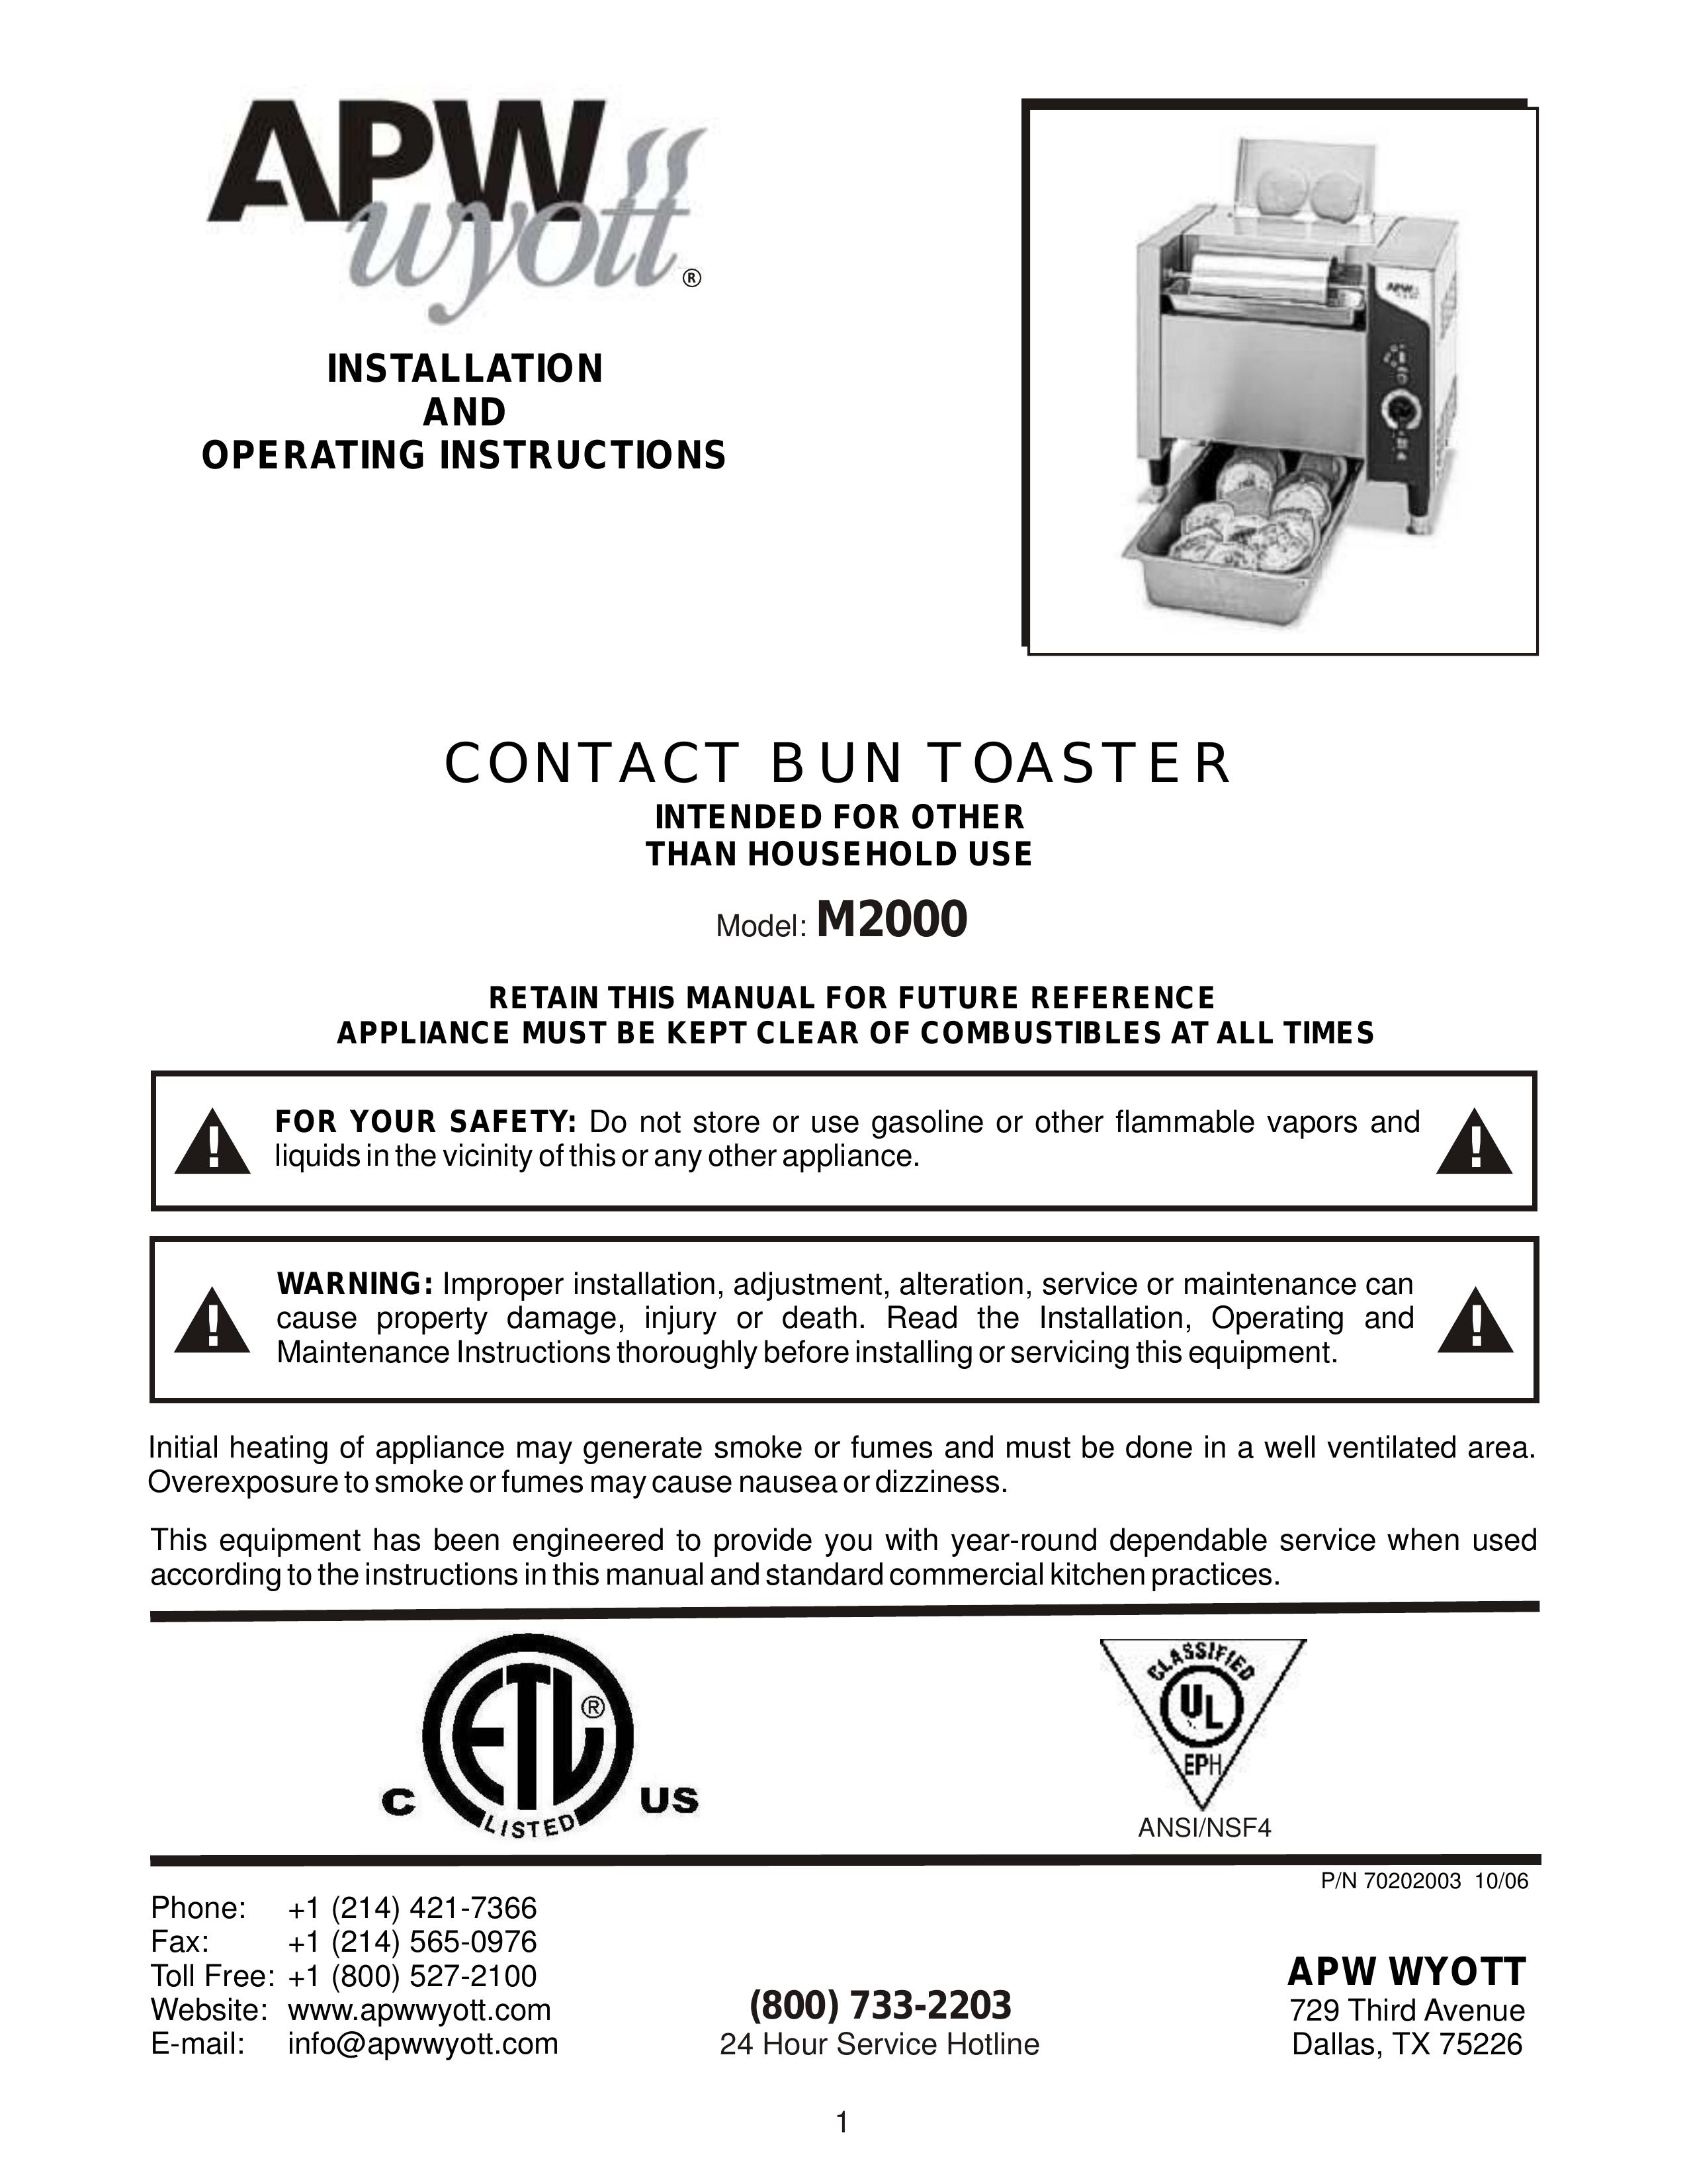 APW Wyott M2000 Toaster User Manual